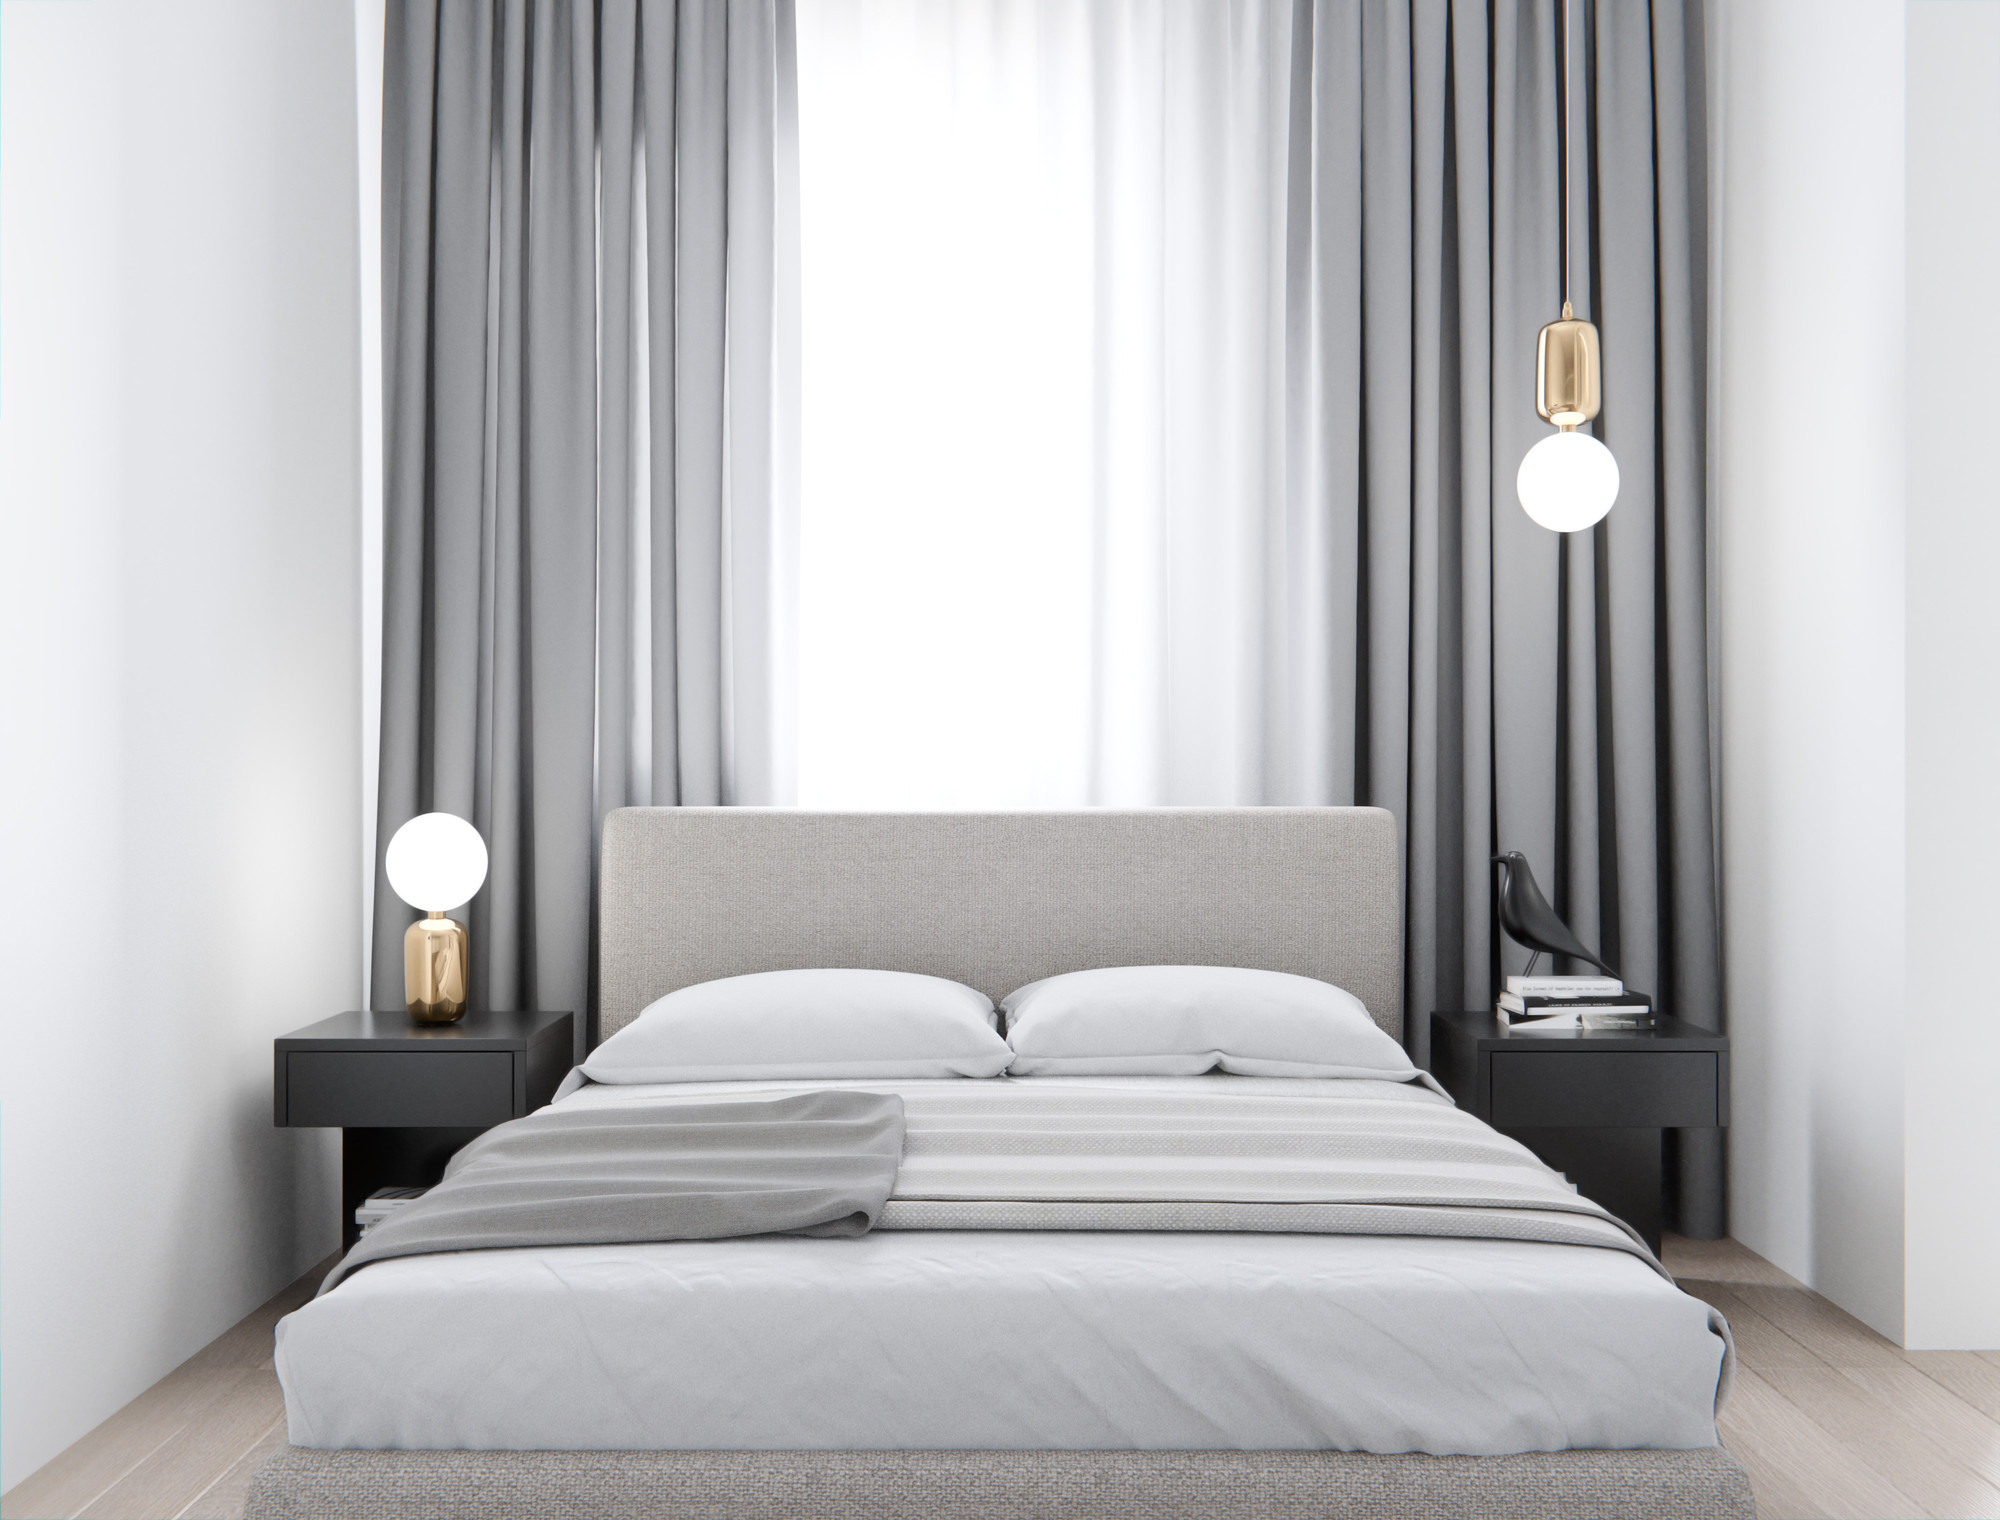 Modern Bedroom Design
 Bedroom Ideas 77 Modern Design Ideas For Your Bedroom